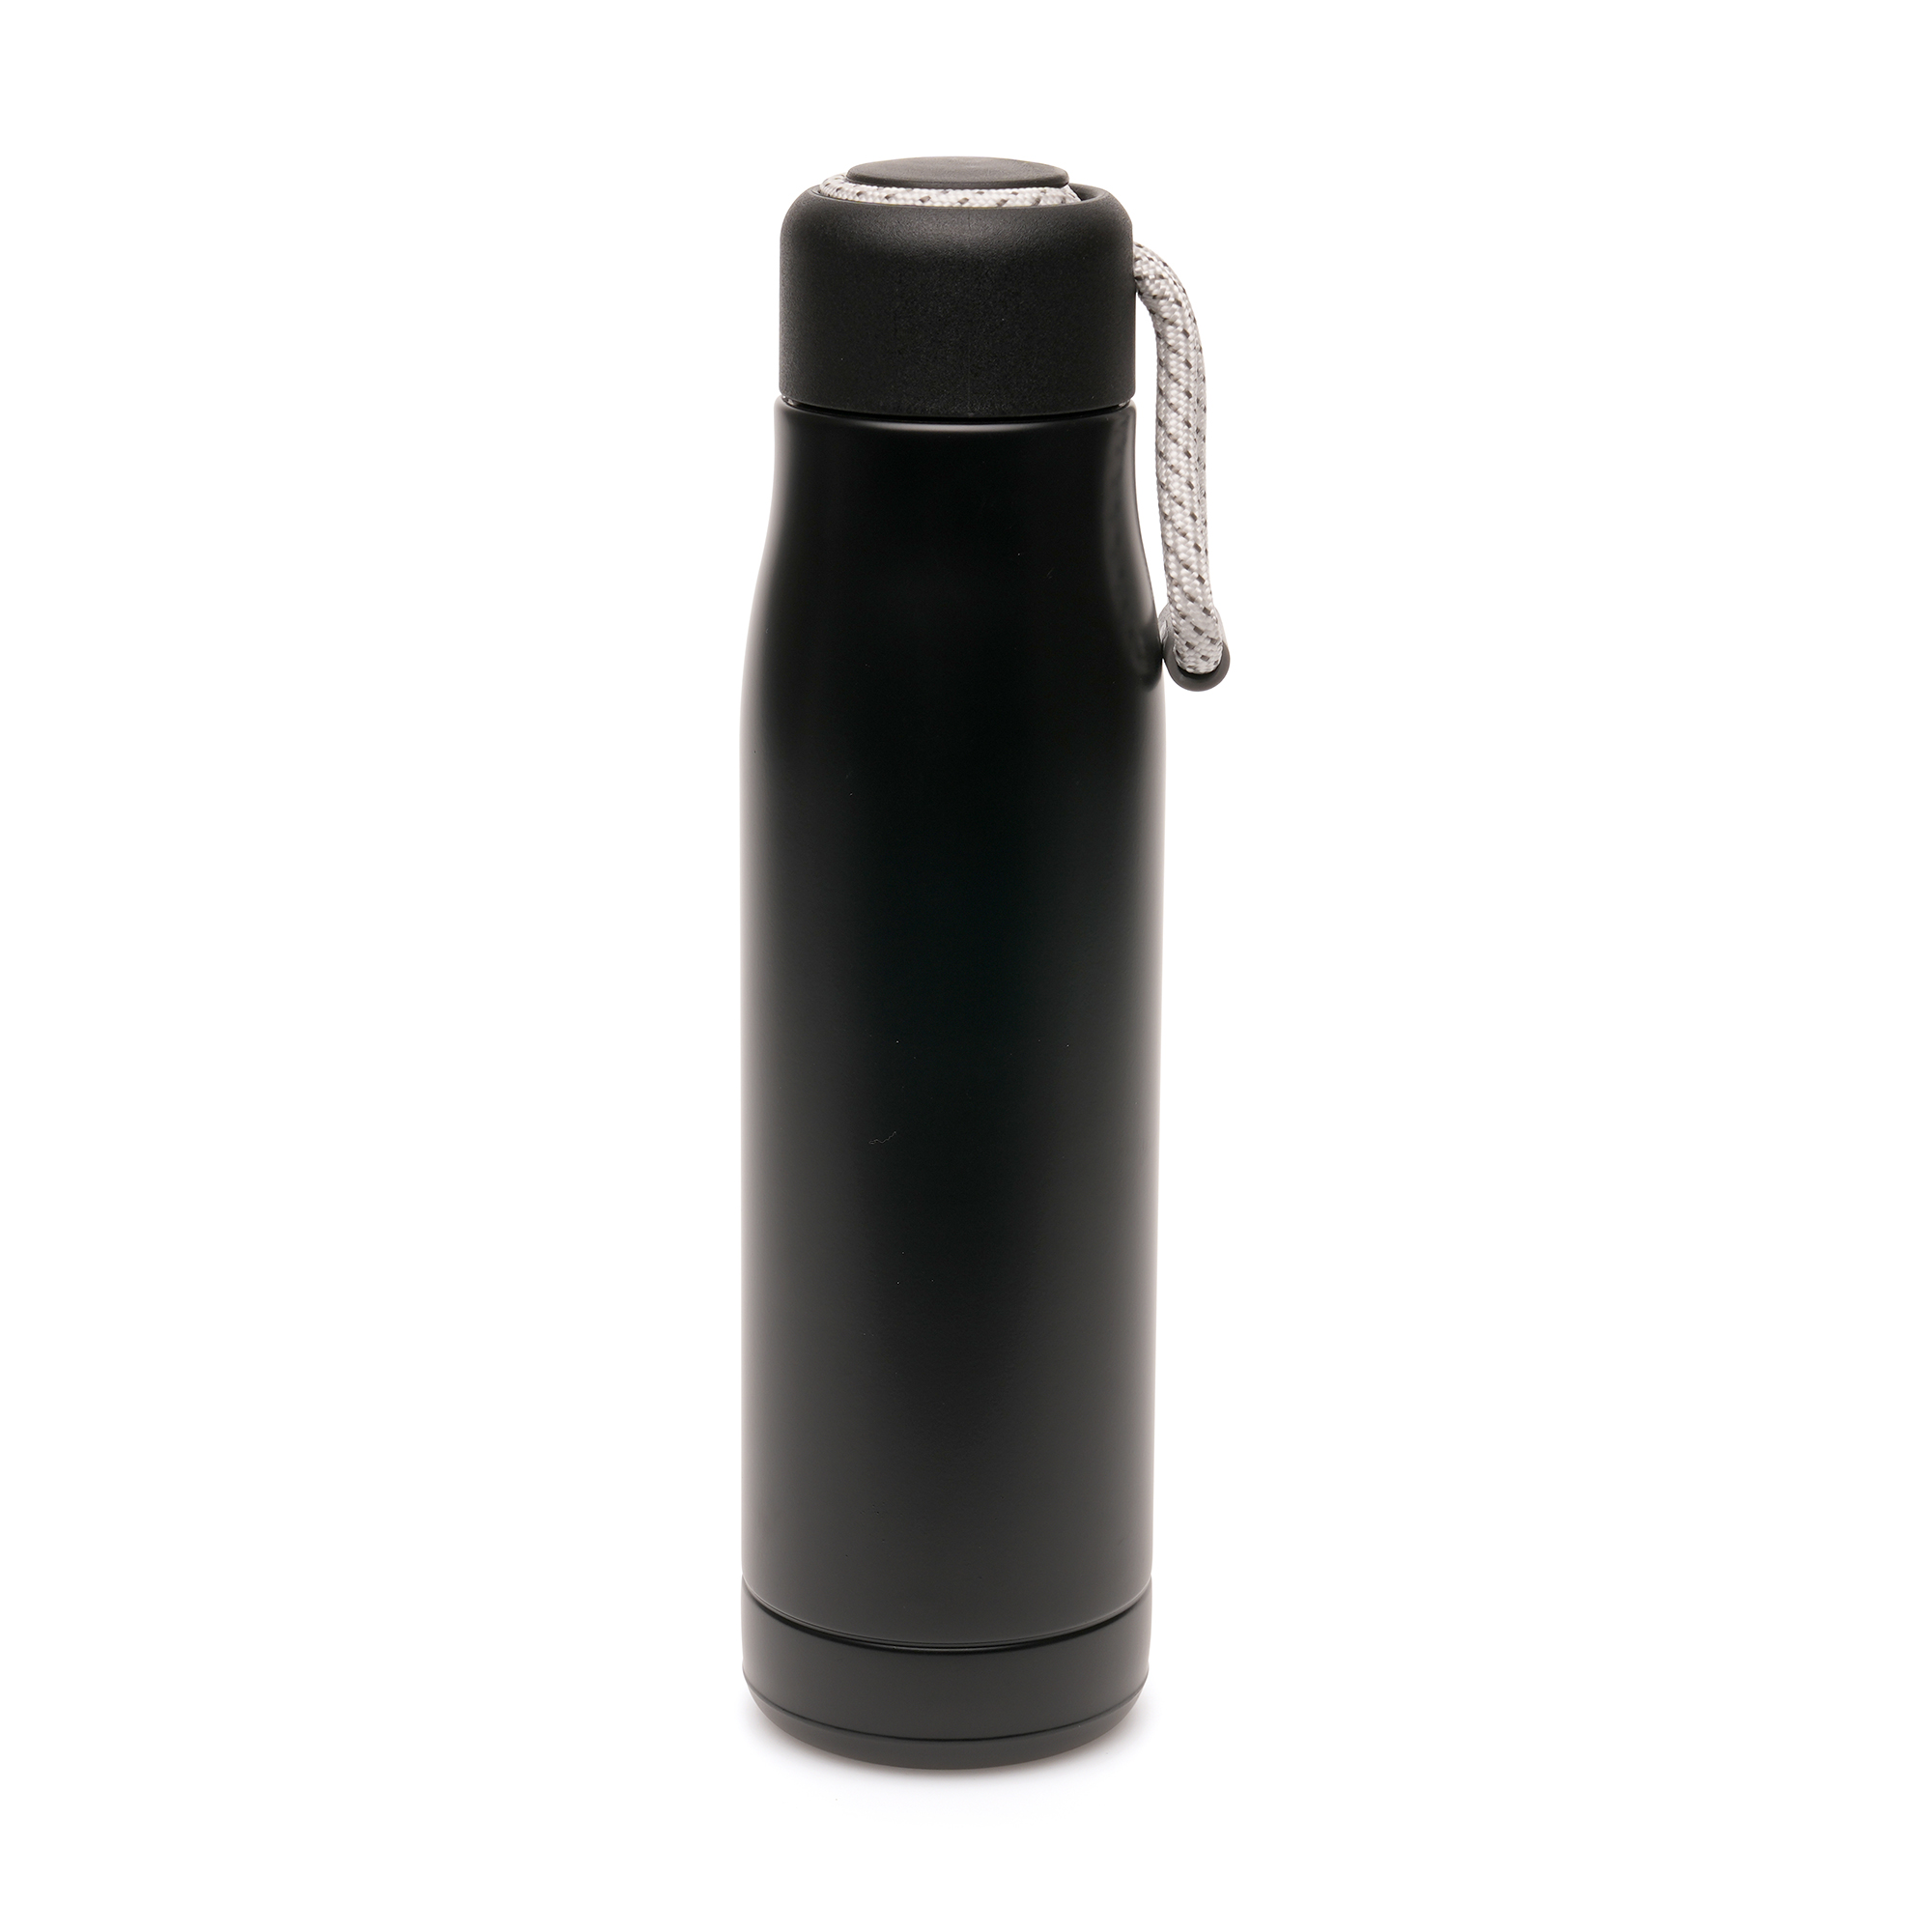 MG0640BK - 550ml Sambourne Flask Bottle